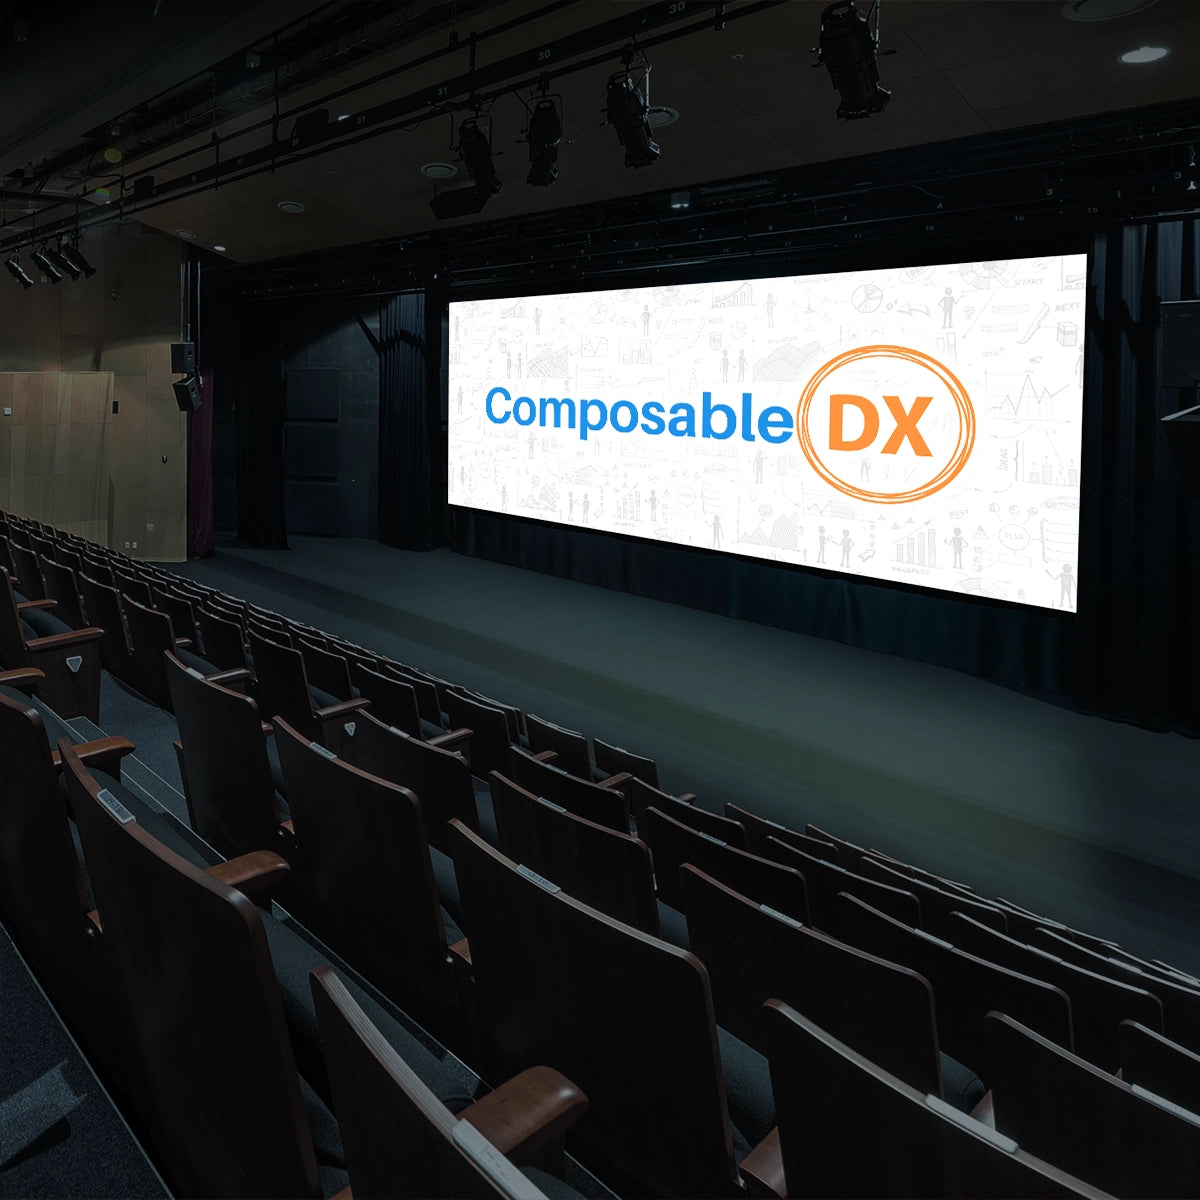 ComposableDX.com